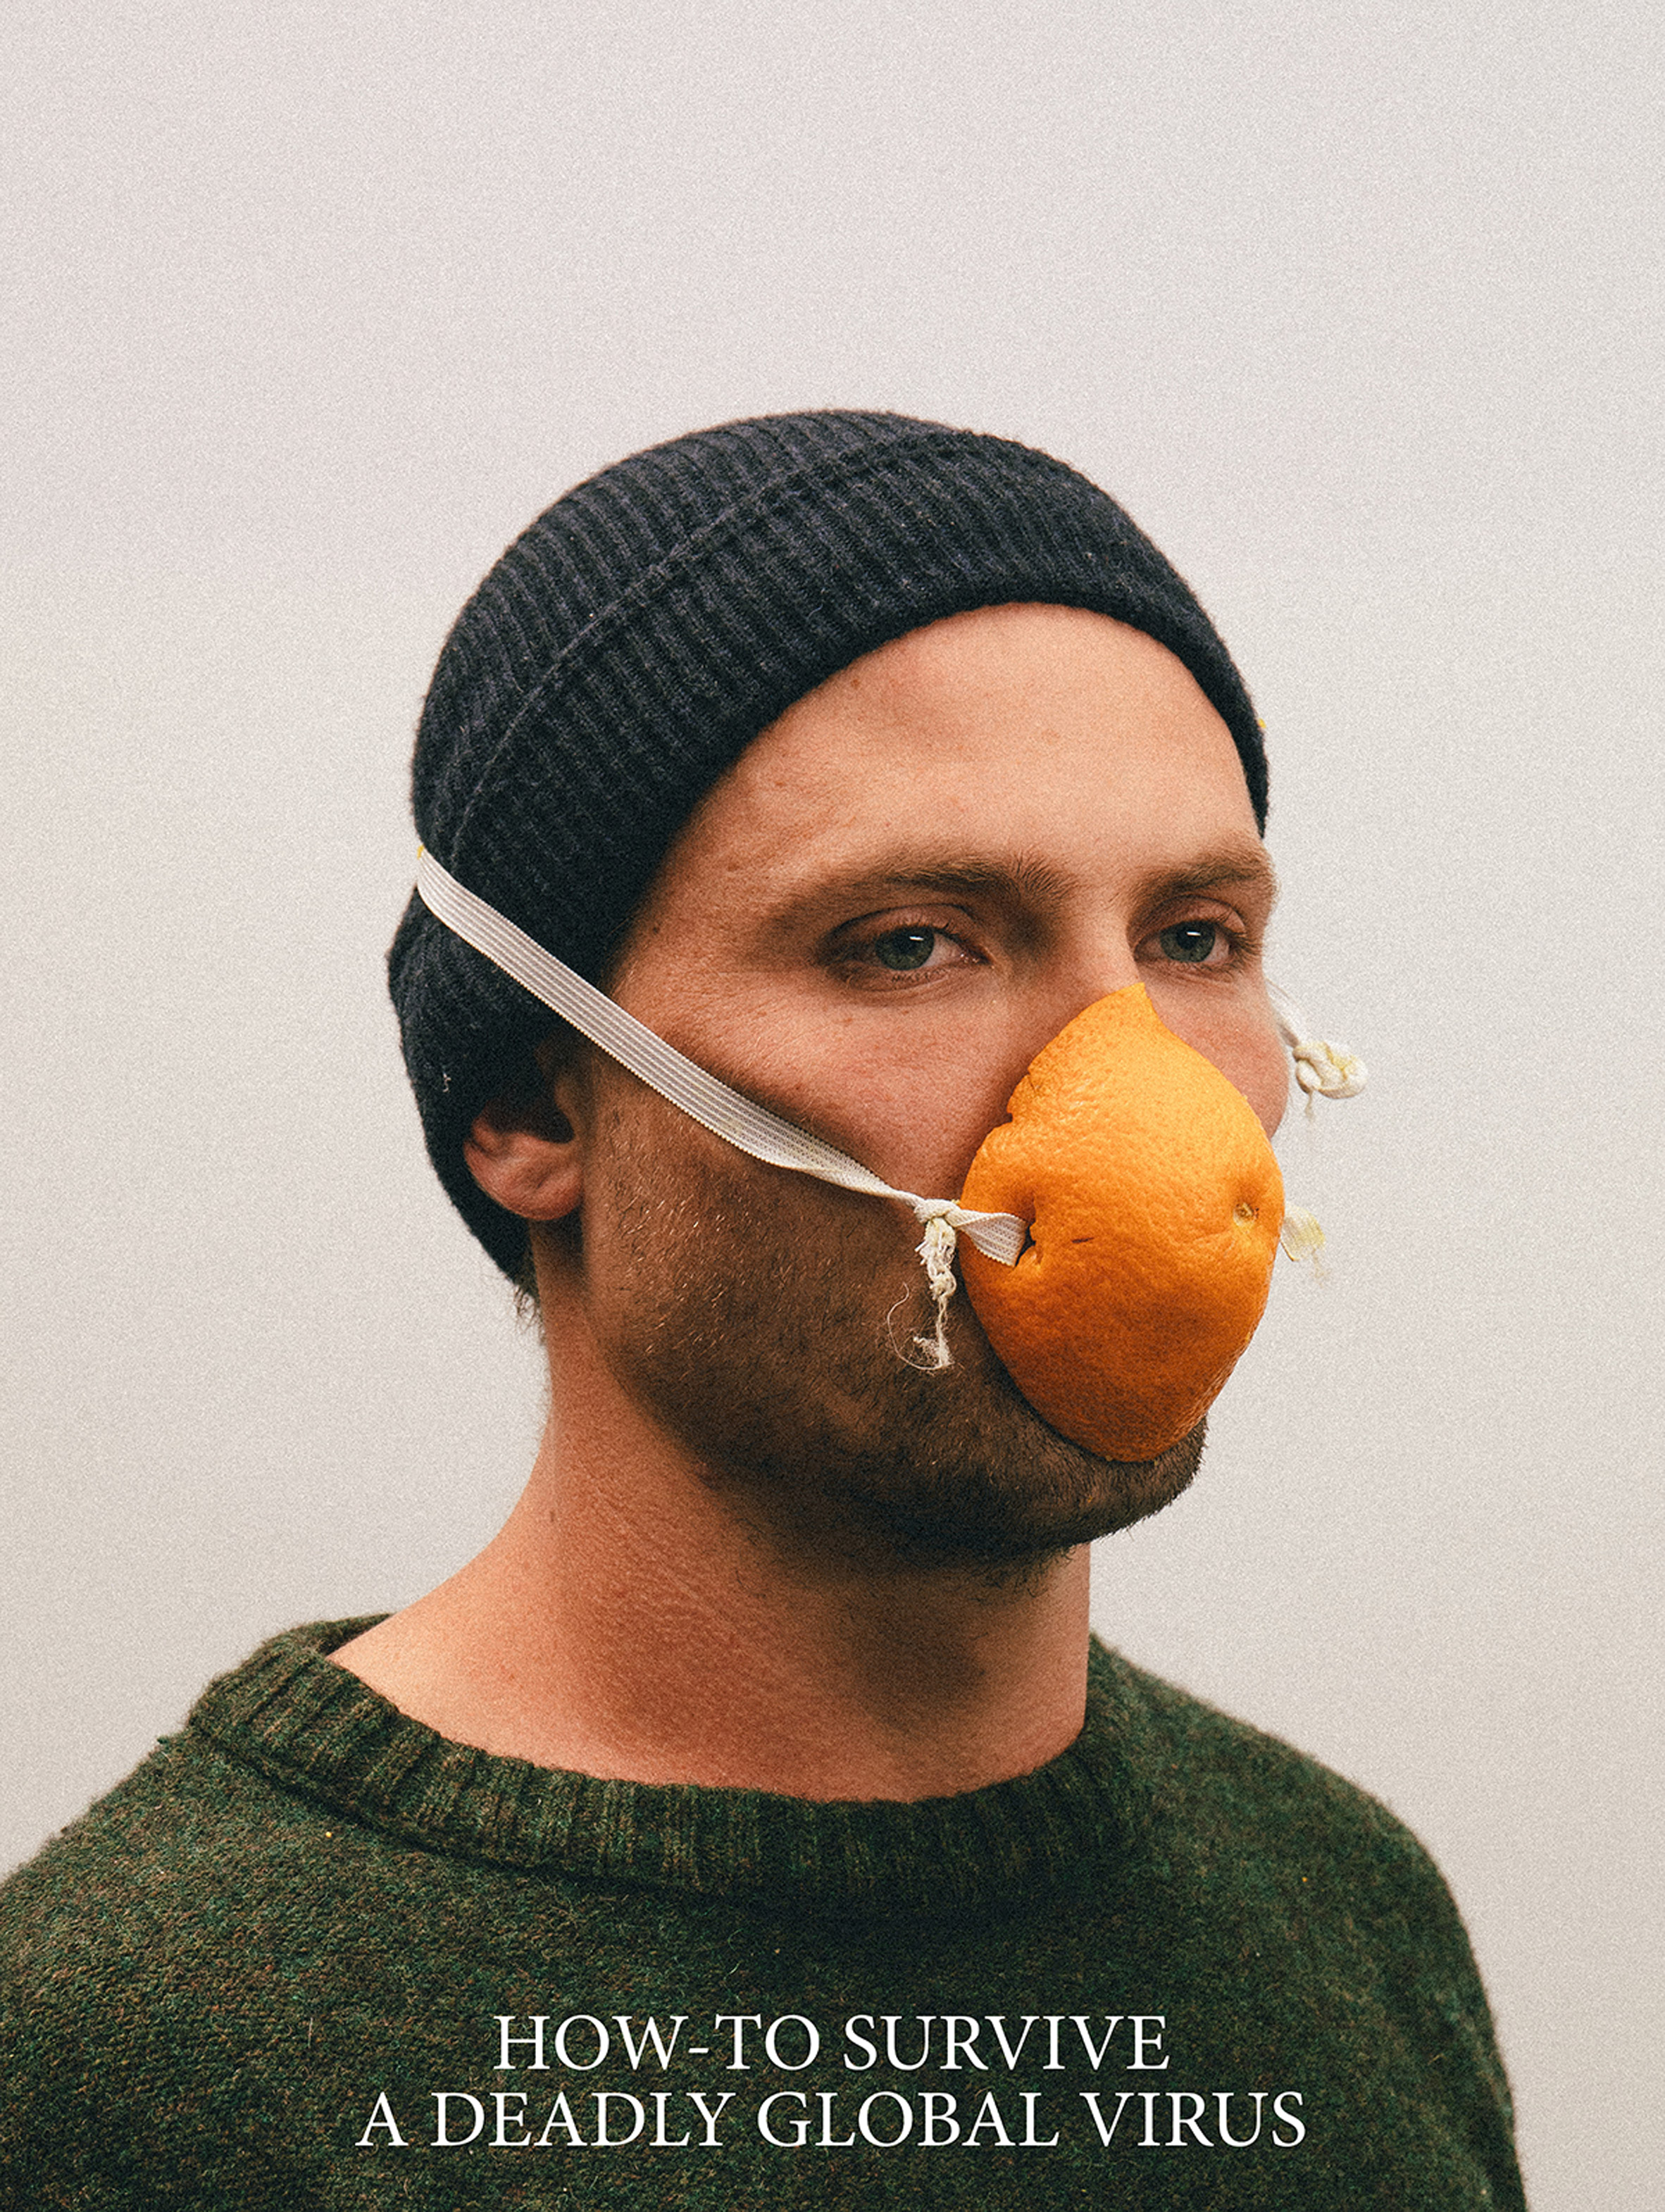 Alternative Coronavirus masks by Max Siedentopf with orange peel